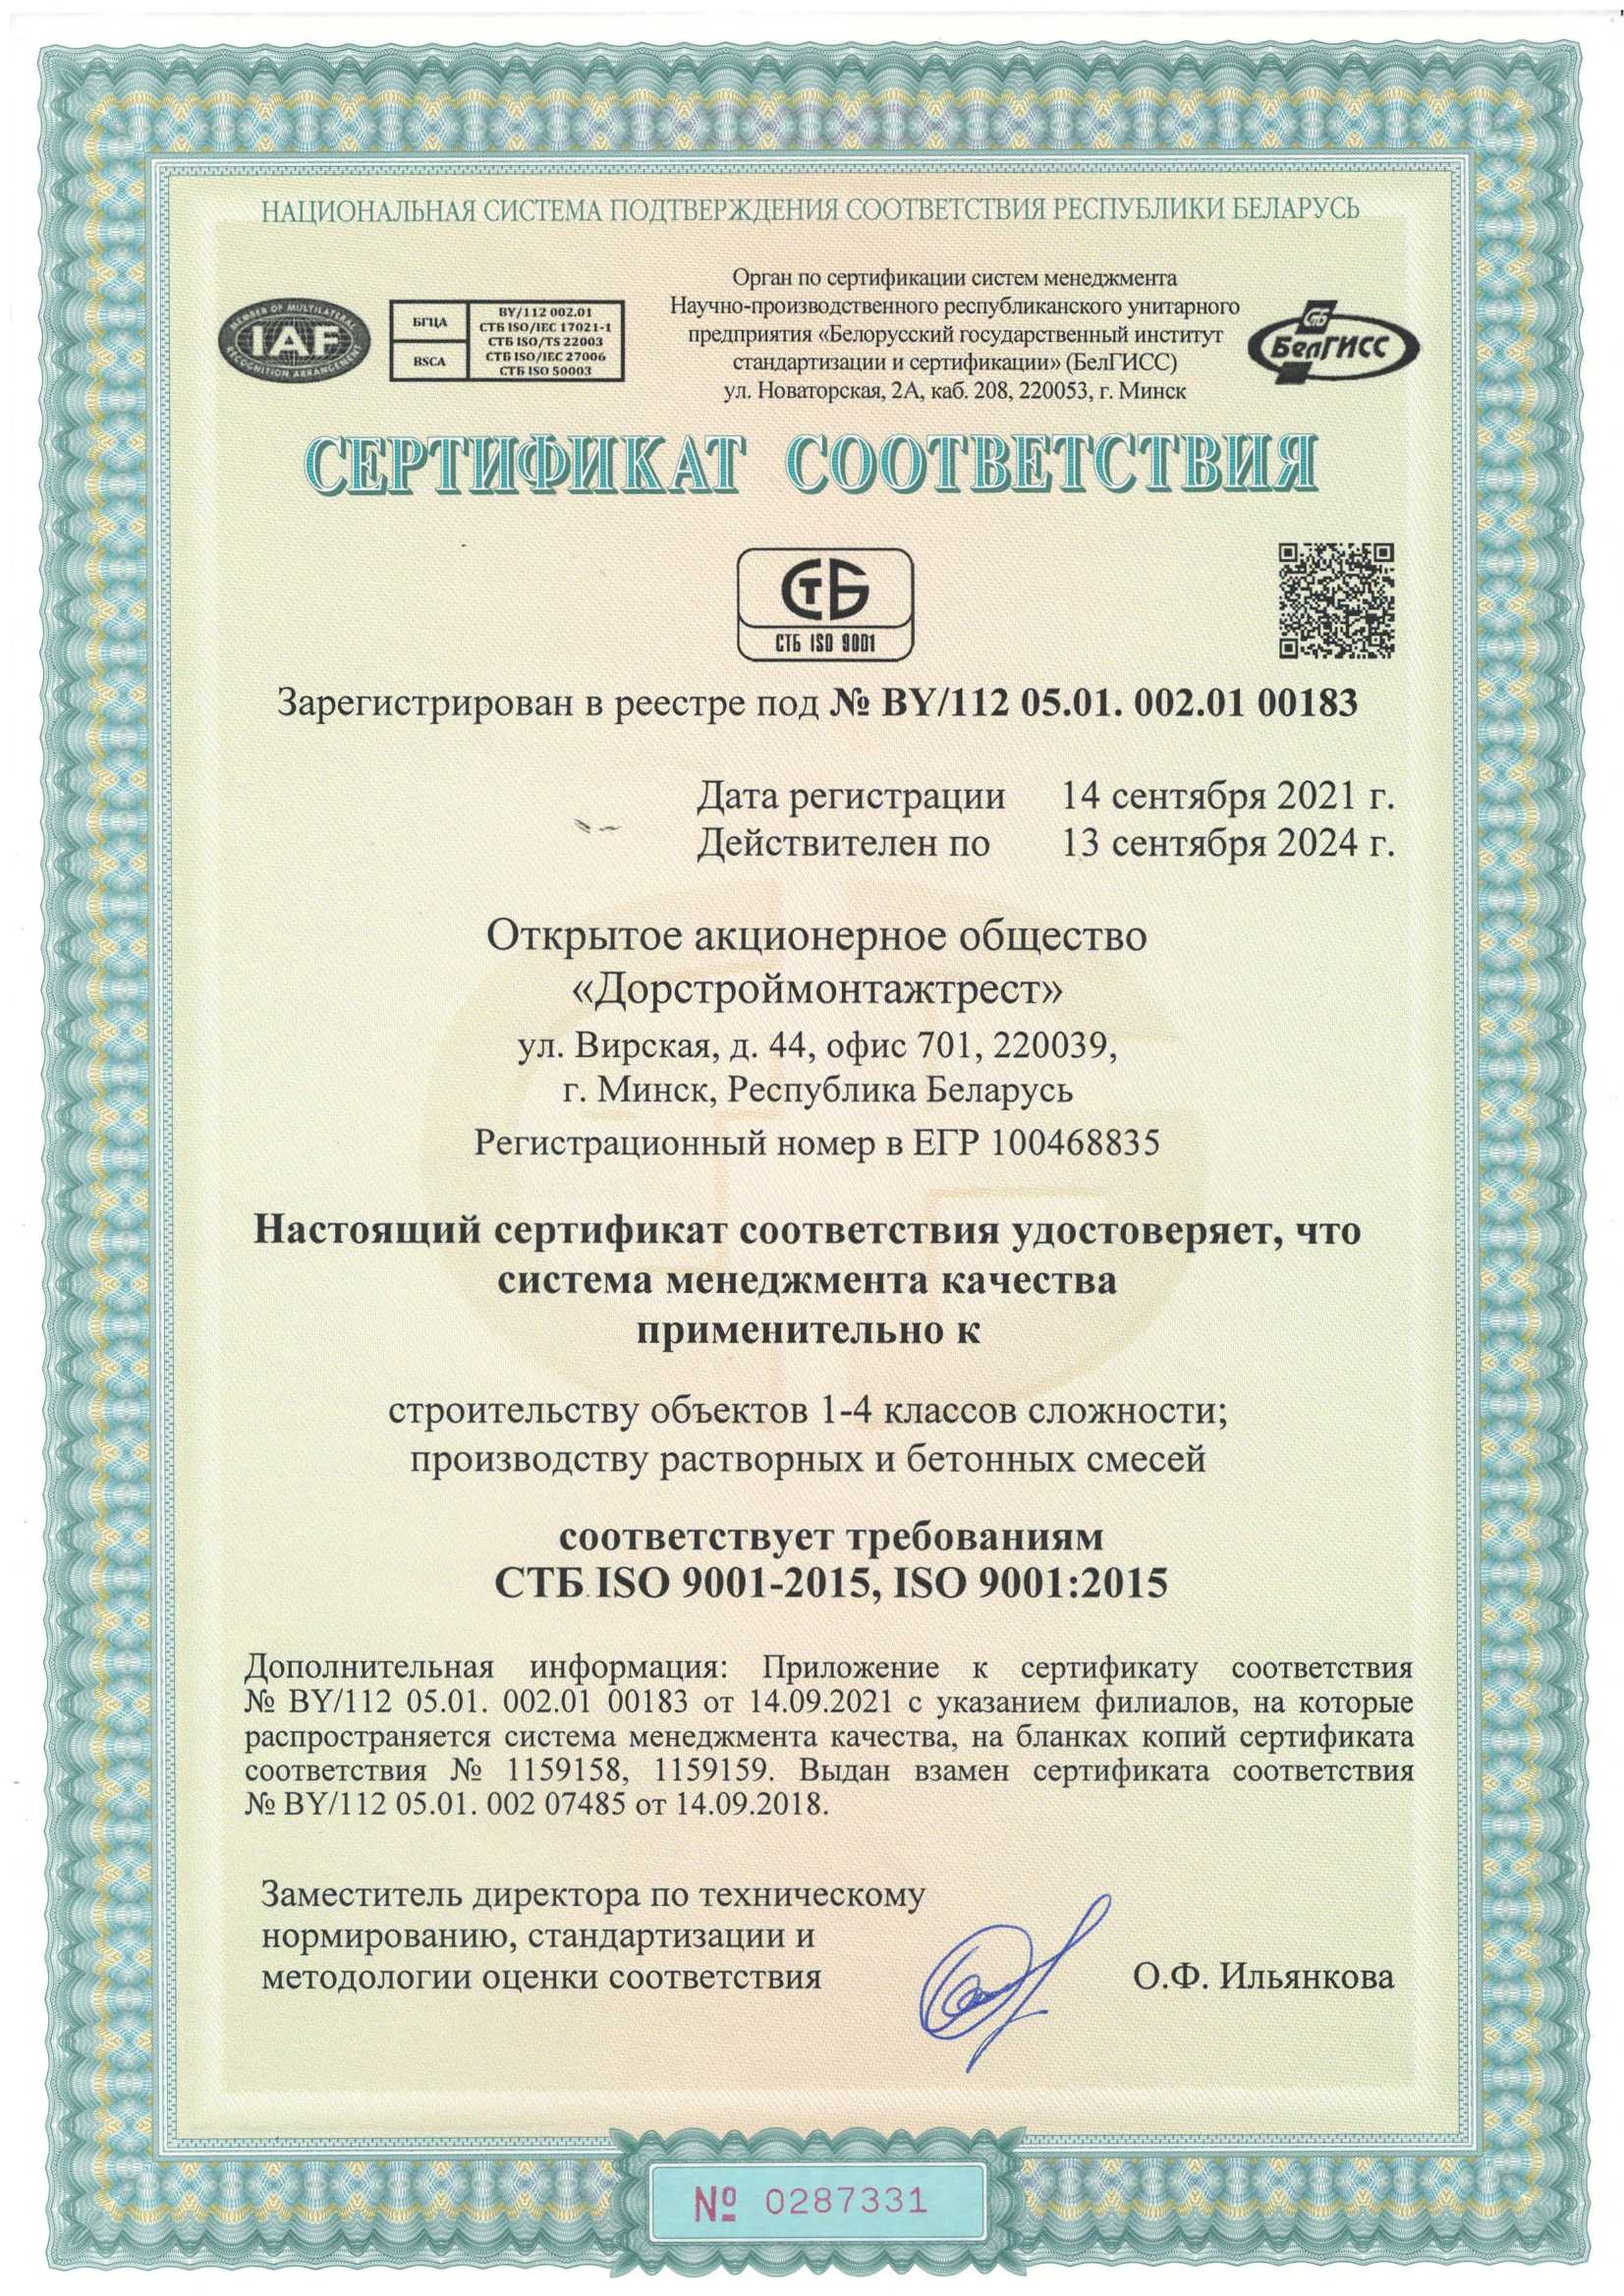 1. sertifikat stb iso 9001-2015 russkiy yazyk-2021 1